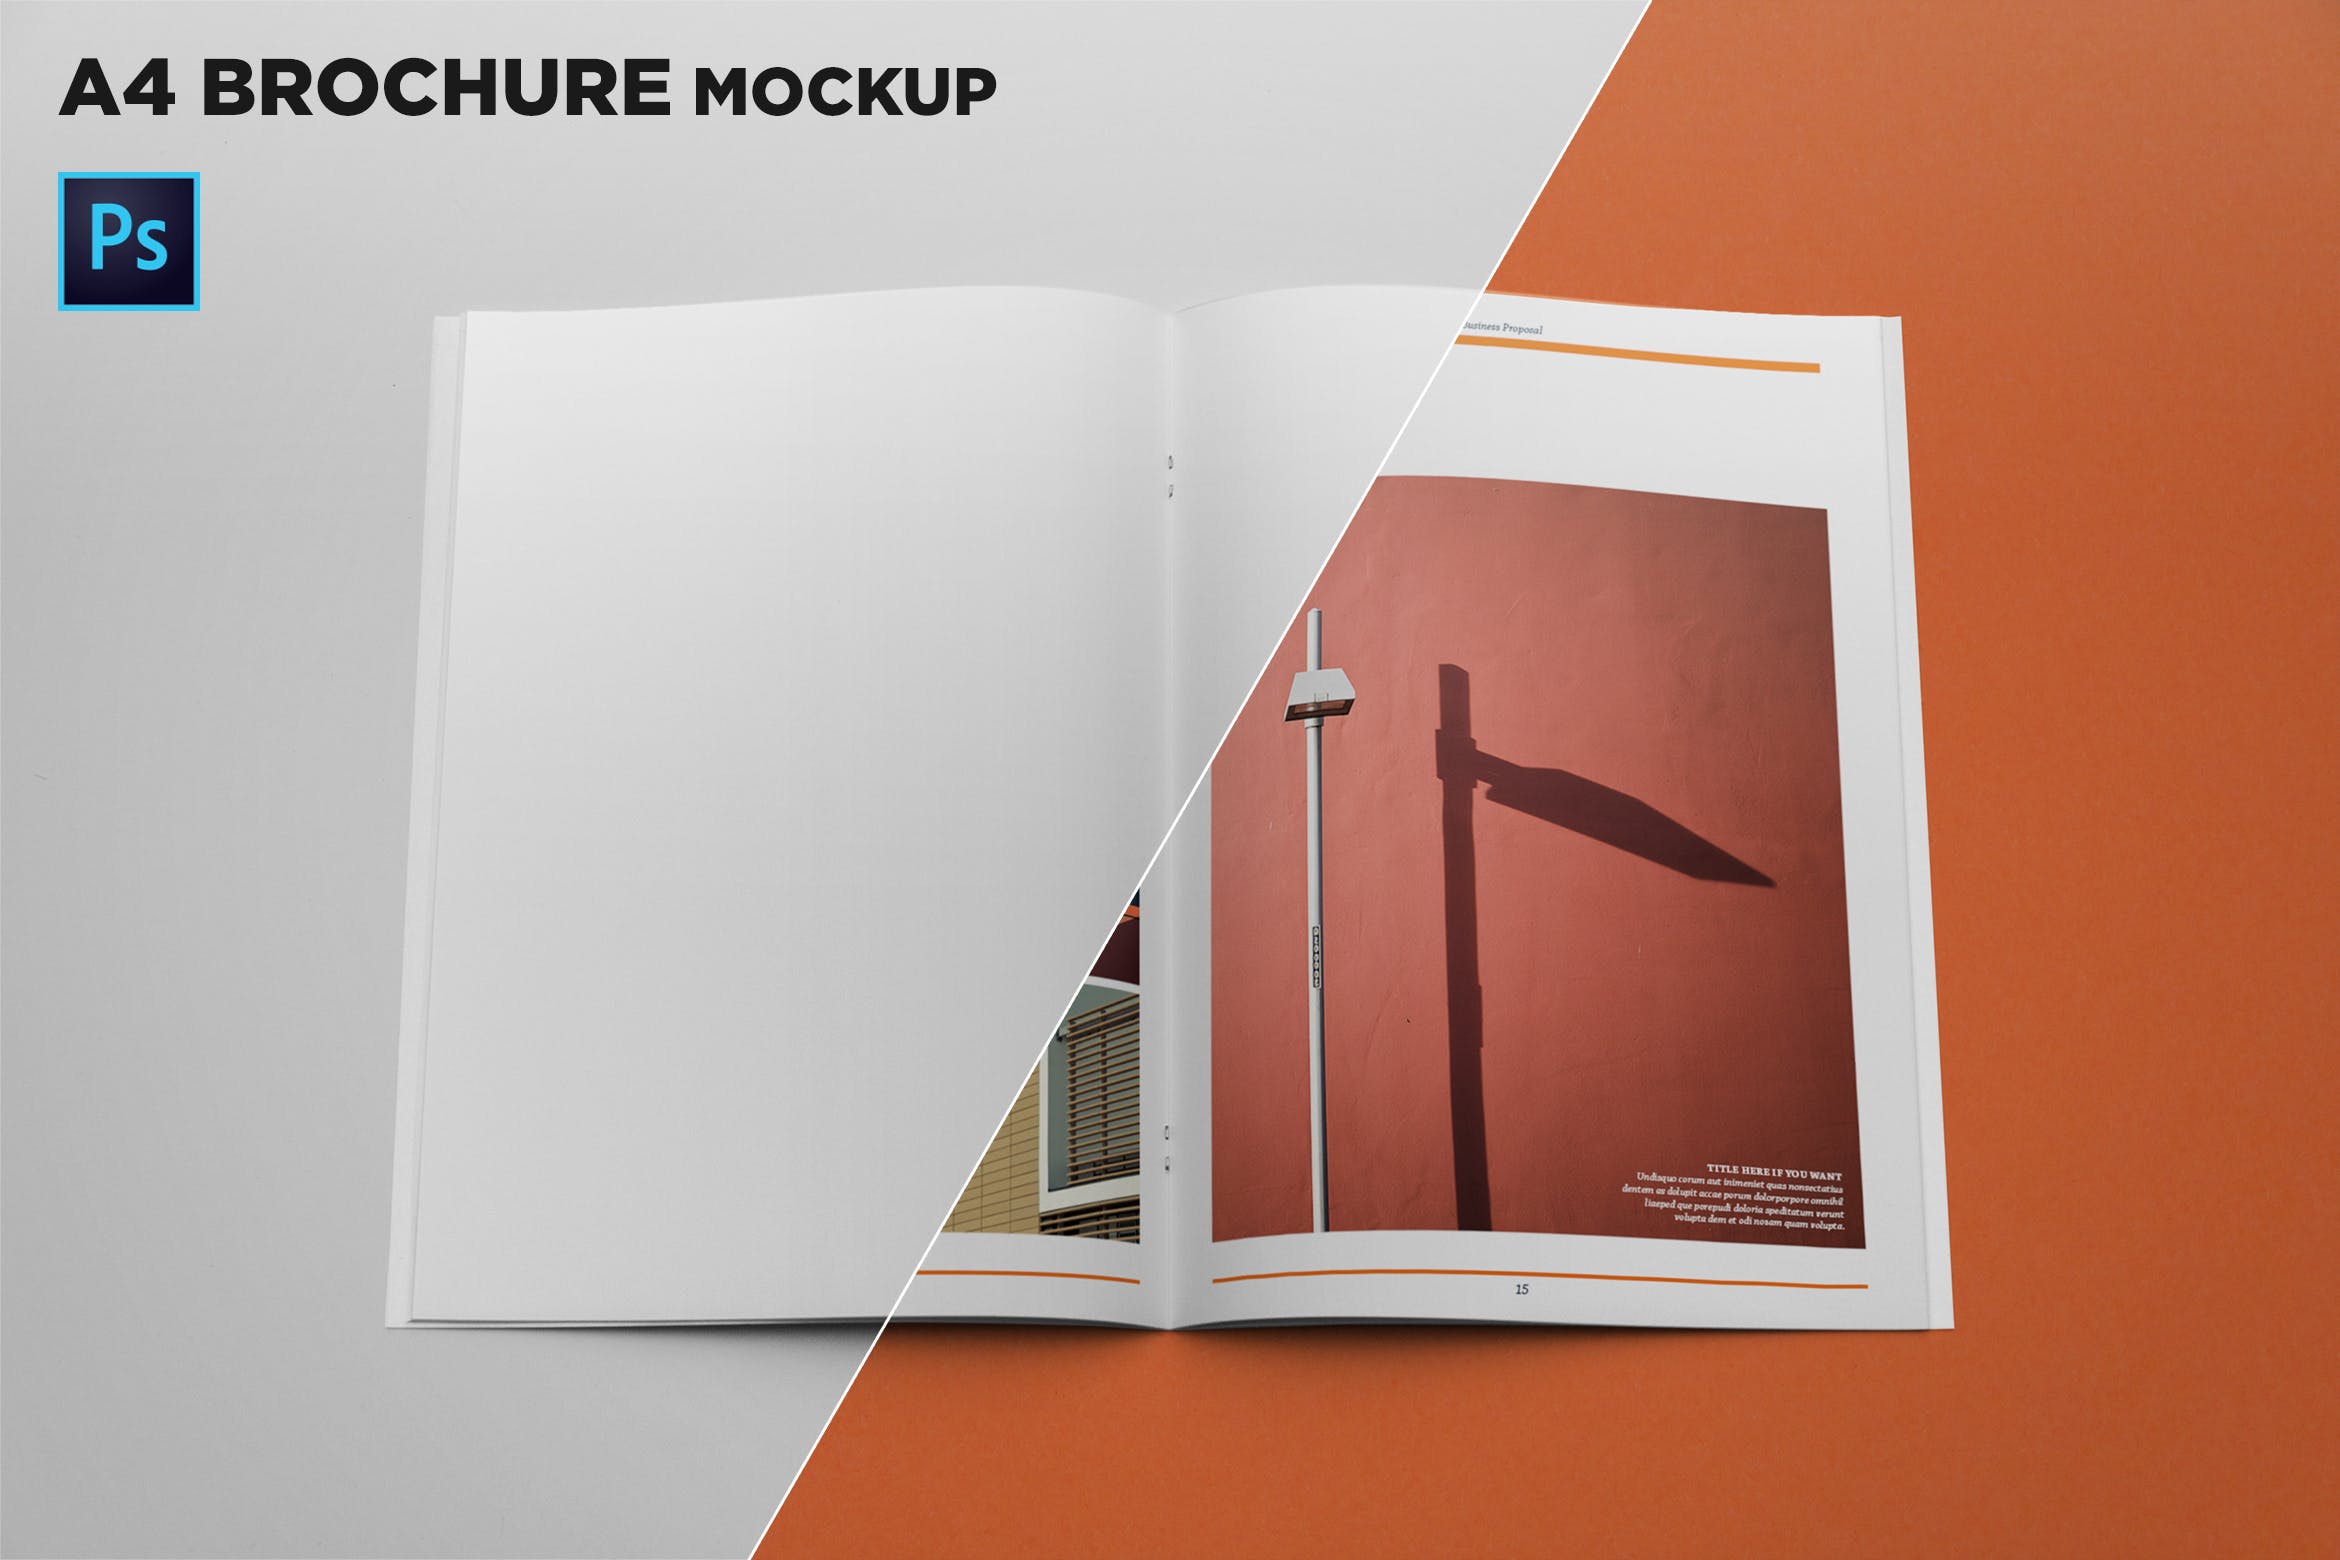 A4宣传小册子/企业画册内页设计顶视图样机蚂蚁素材精选 A4 Brochure Mockup Top View插图